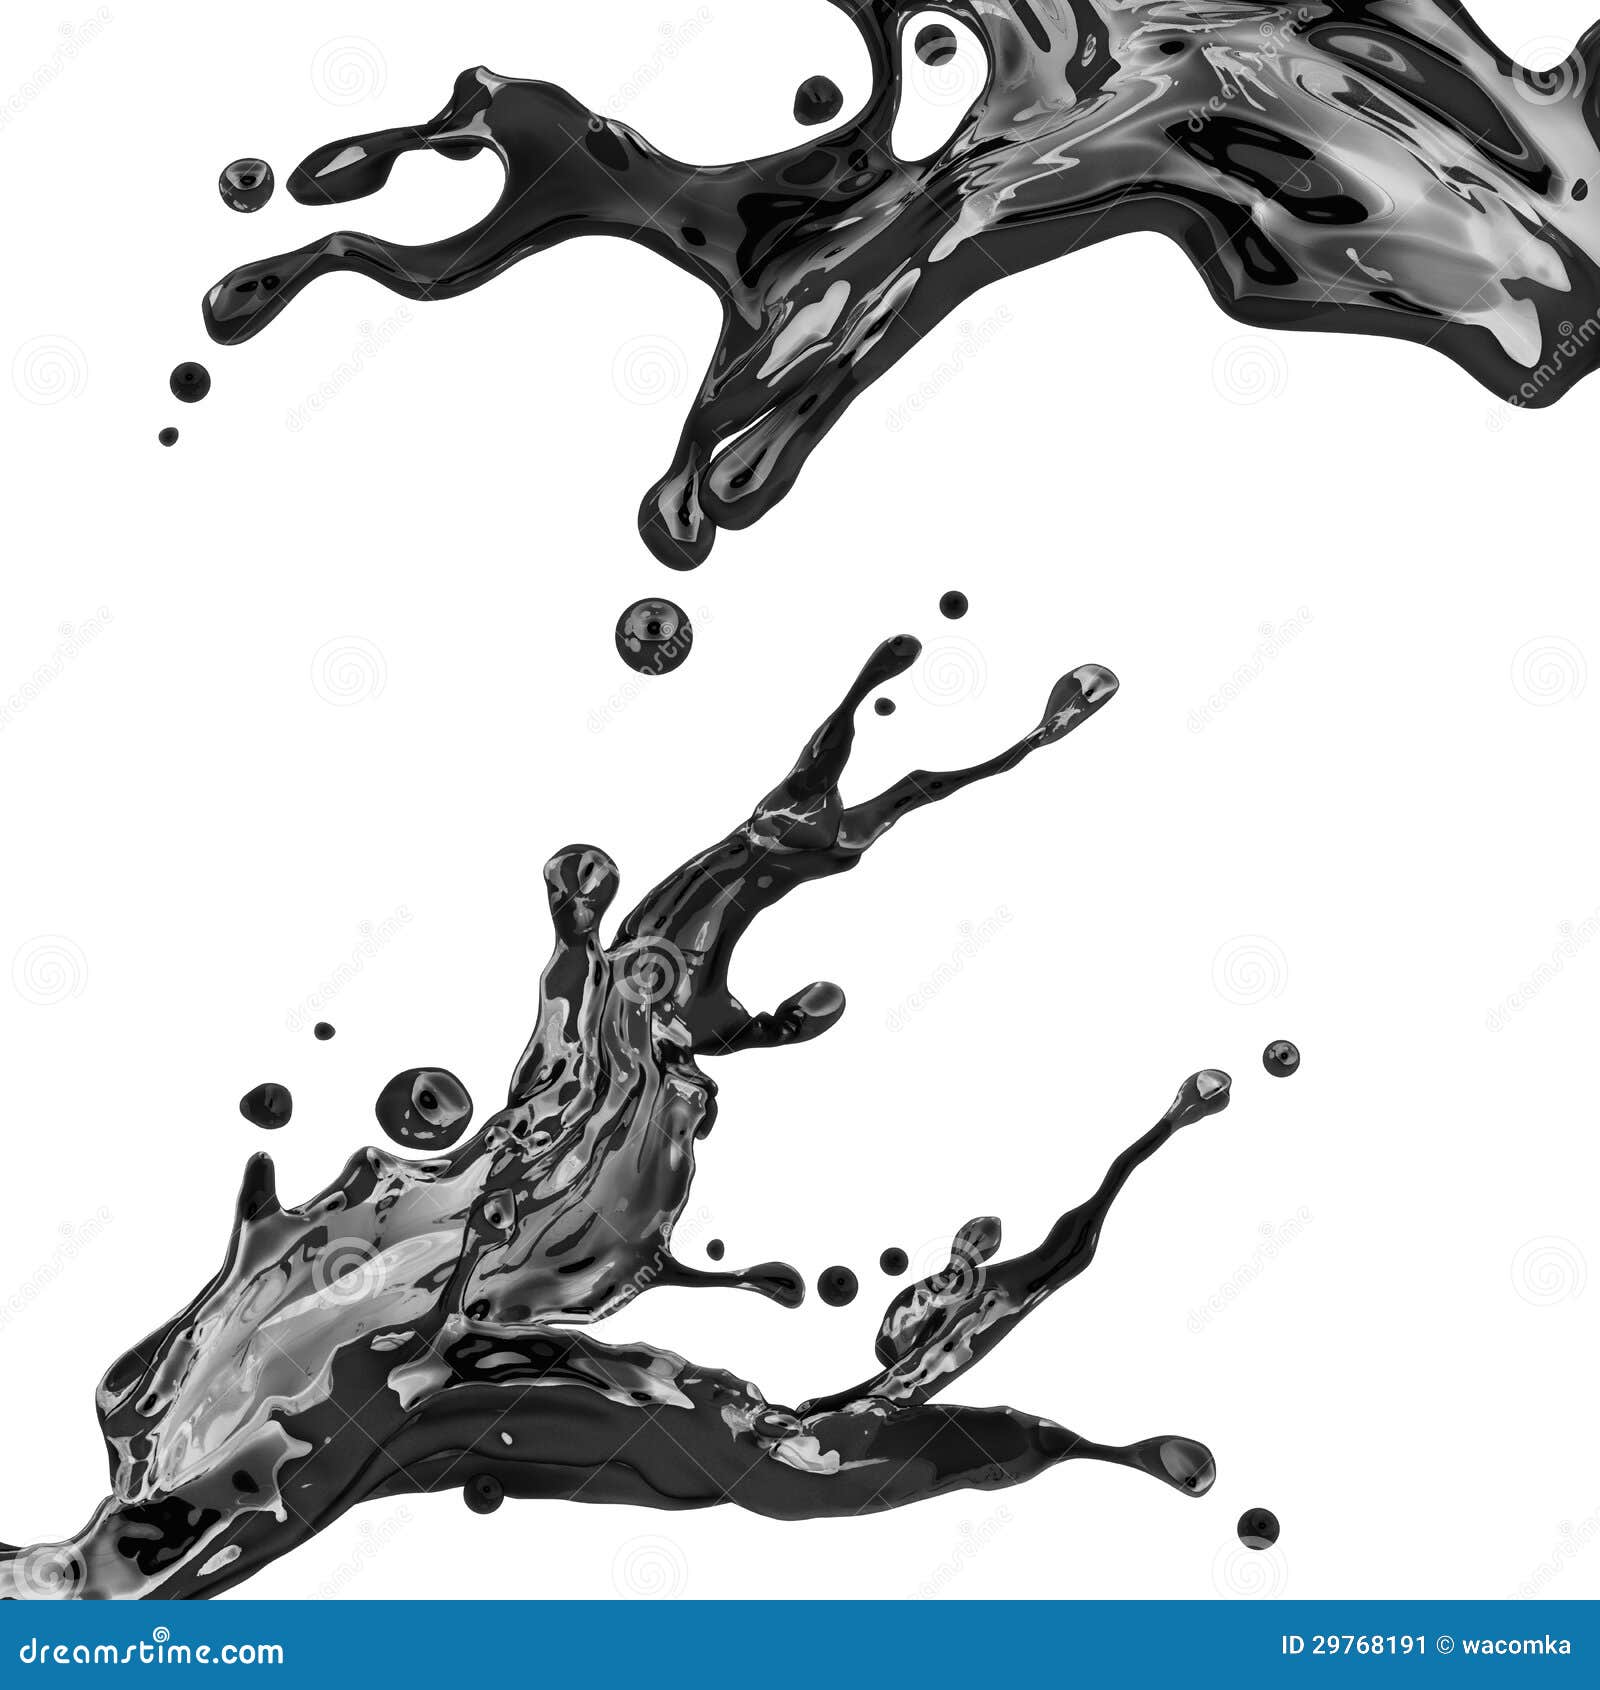 Black Ink Or Oil Liquid Splash Stock Image - Image: 29768191